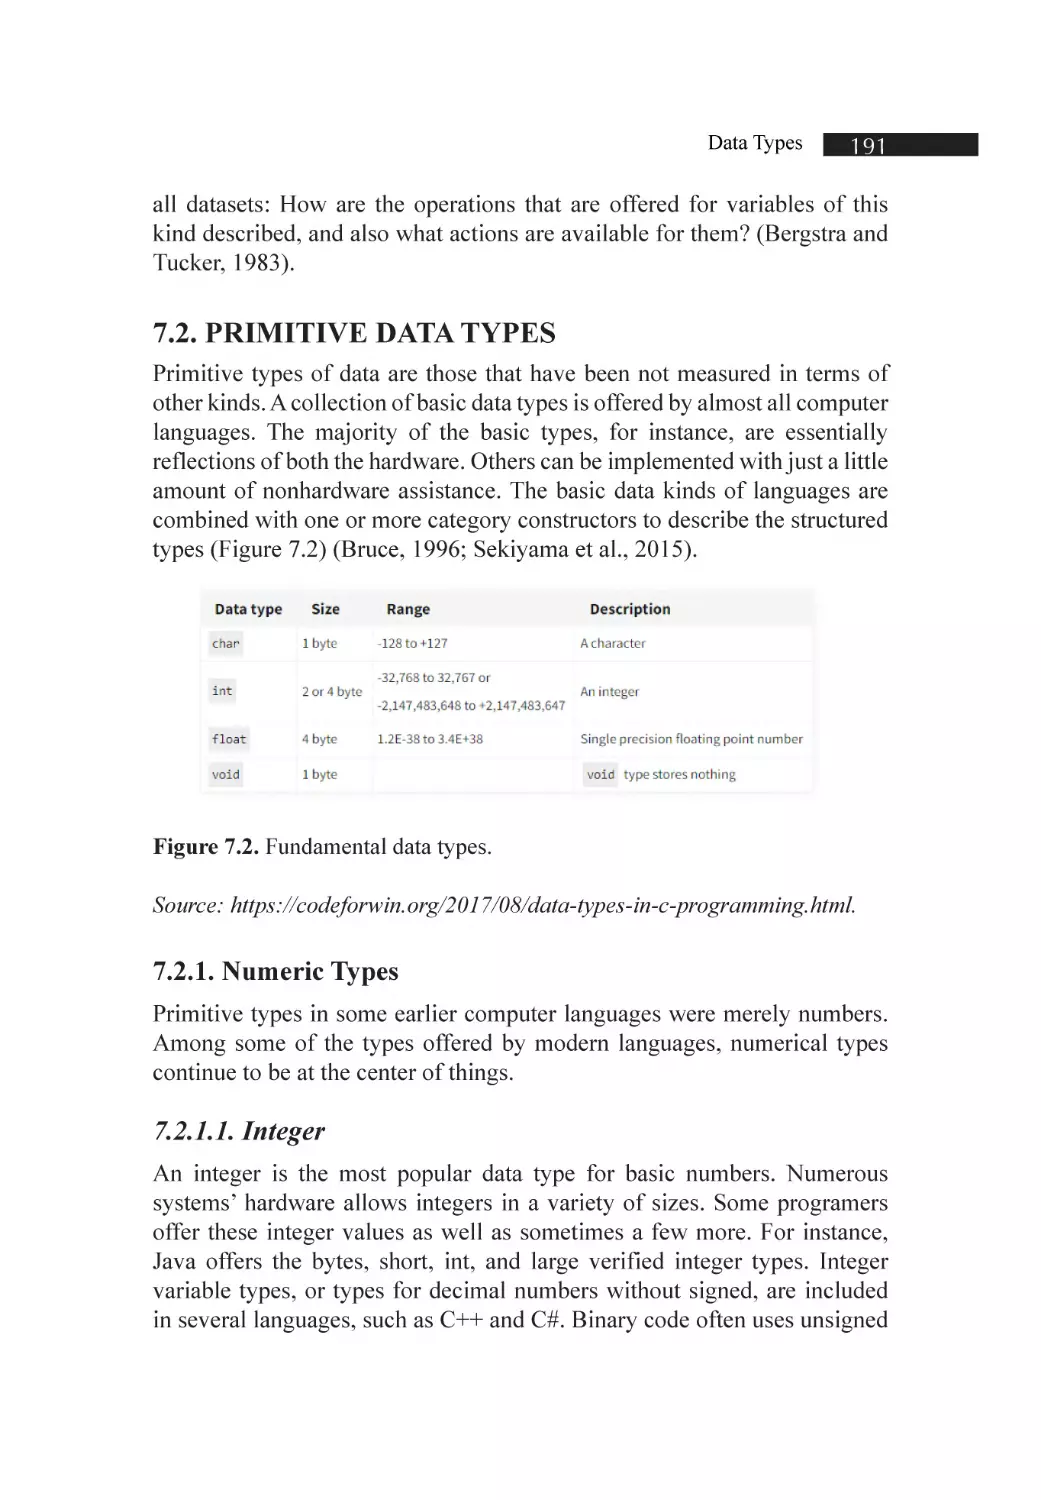 7.2. Primitive Data Types